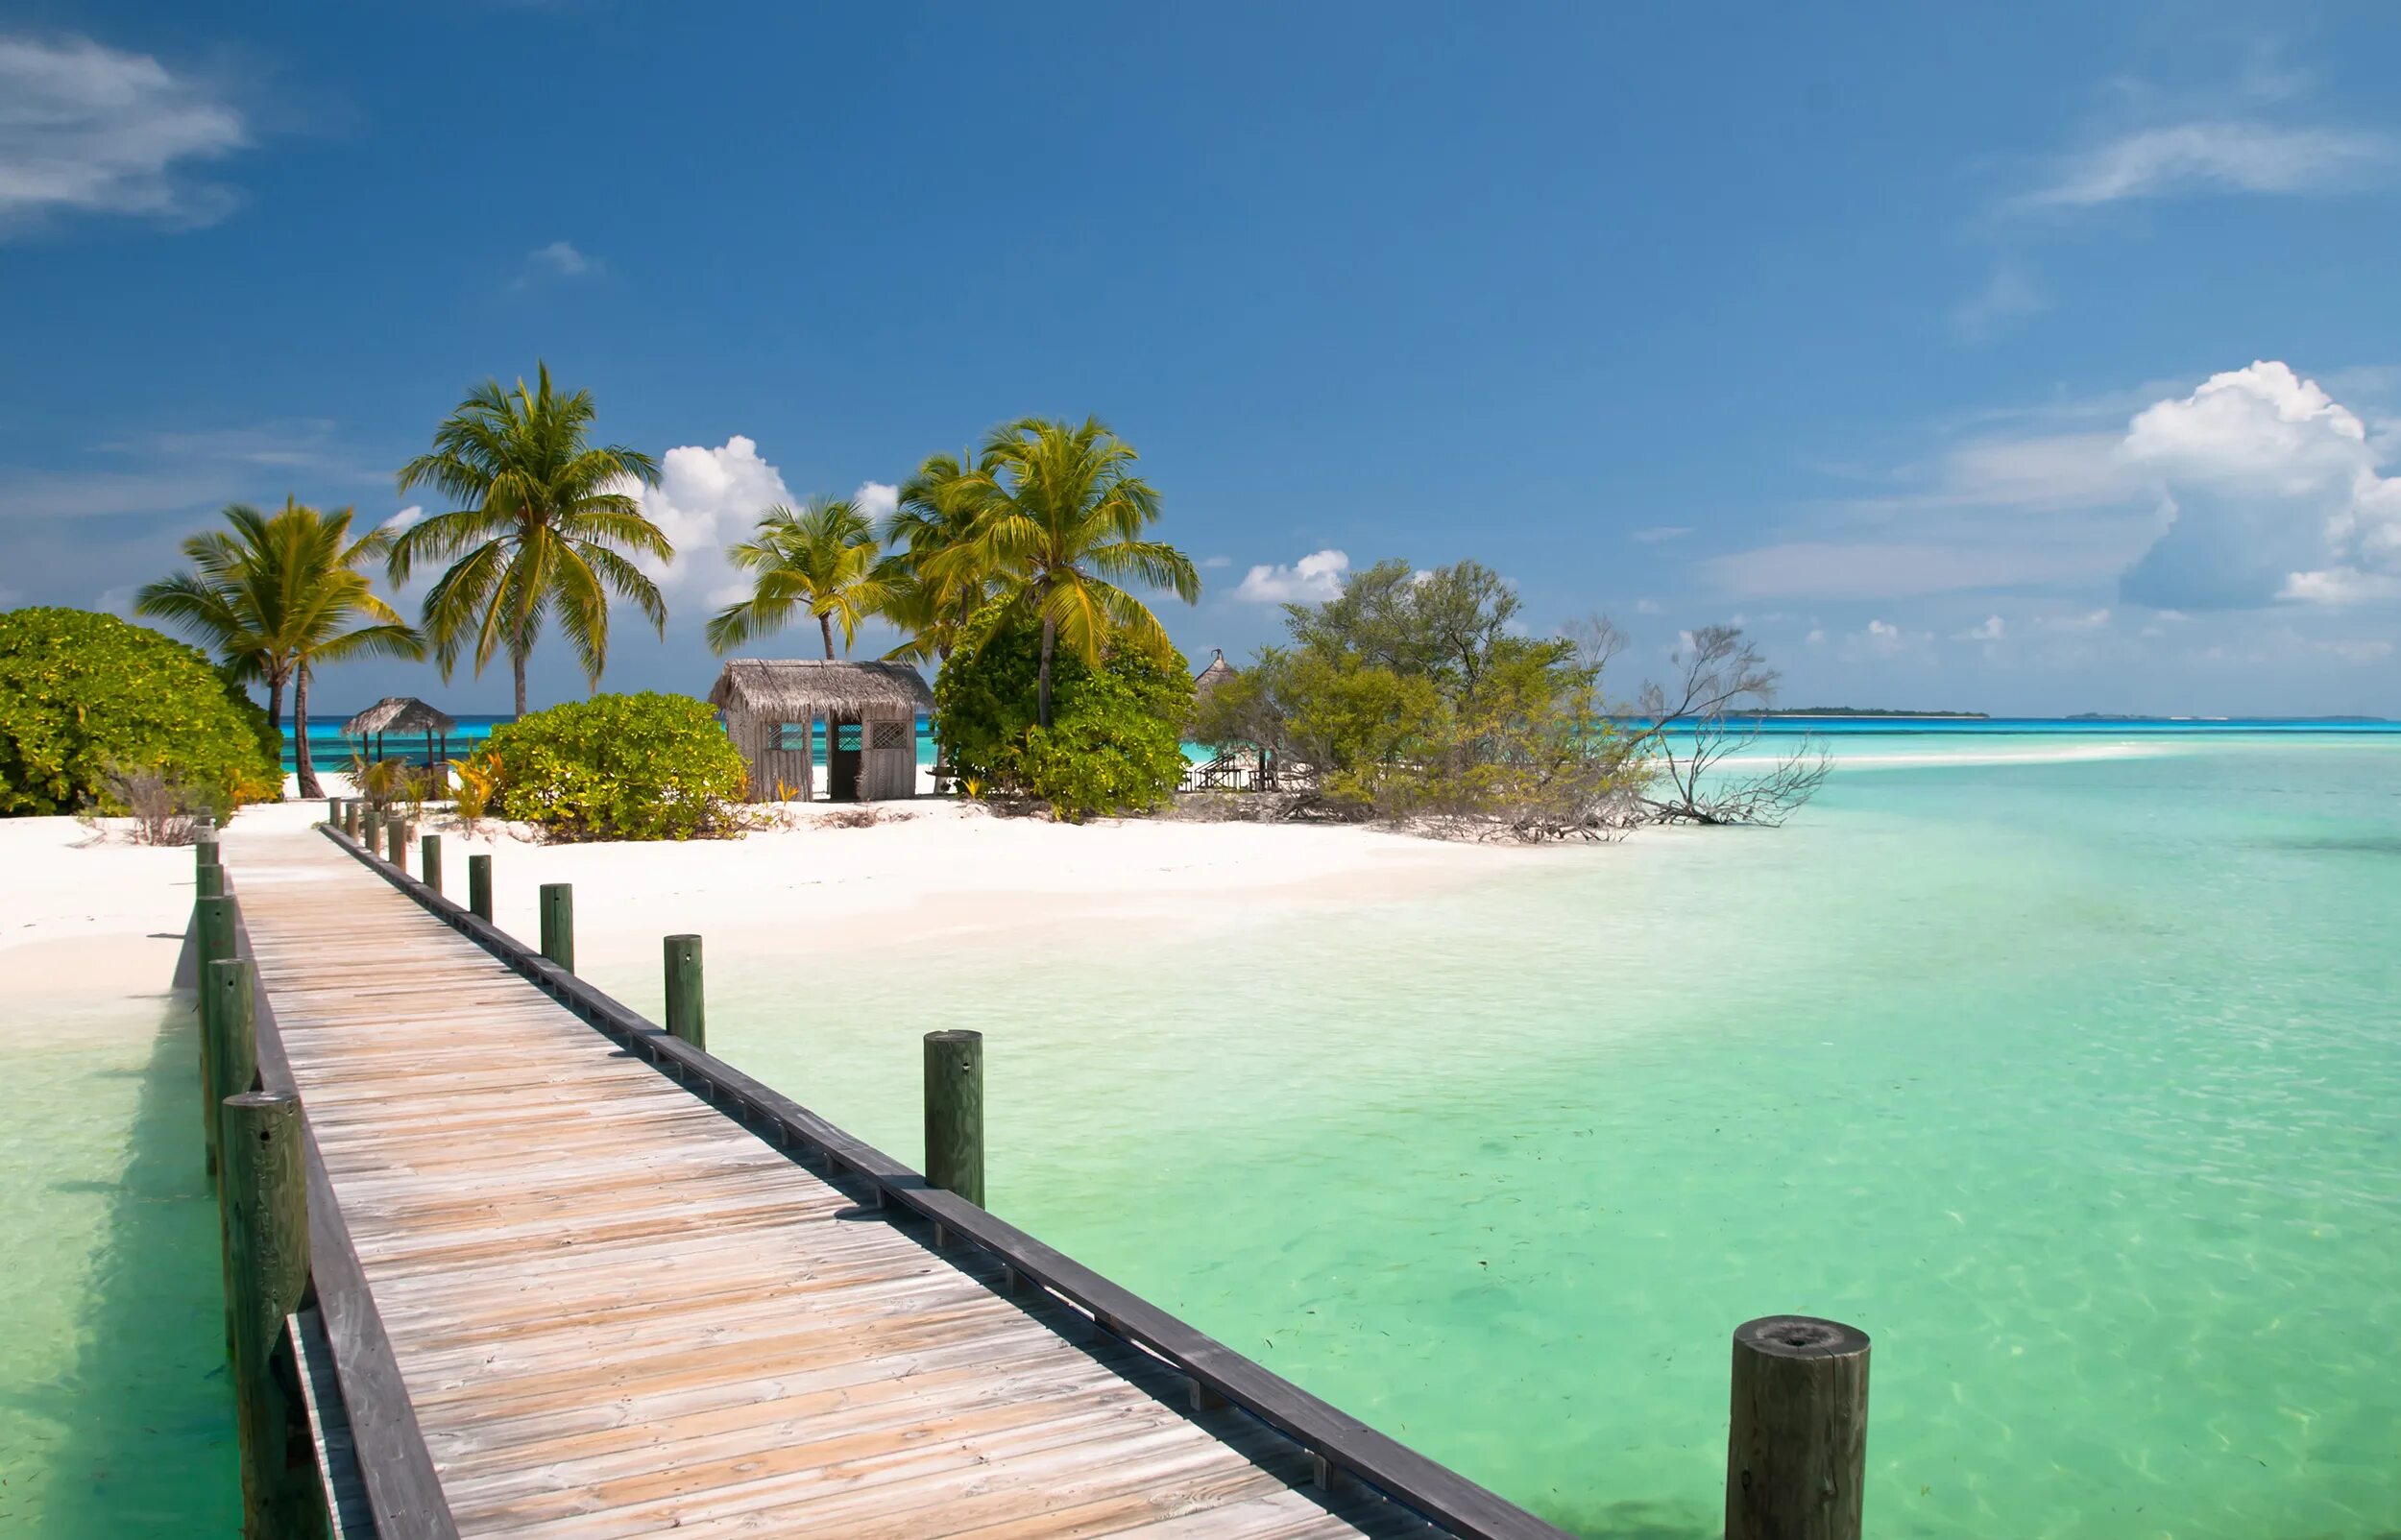 Эксума Багамские острова. Багамы остров Тауэр Бэй. Остров Парадайз Багамские острова. Фрипорт Багамы.